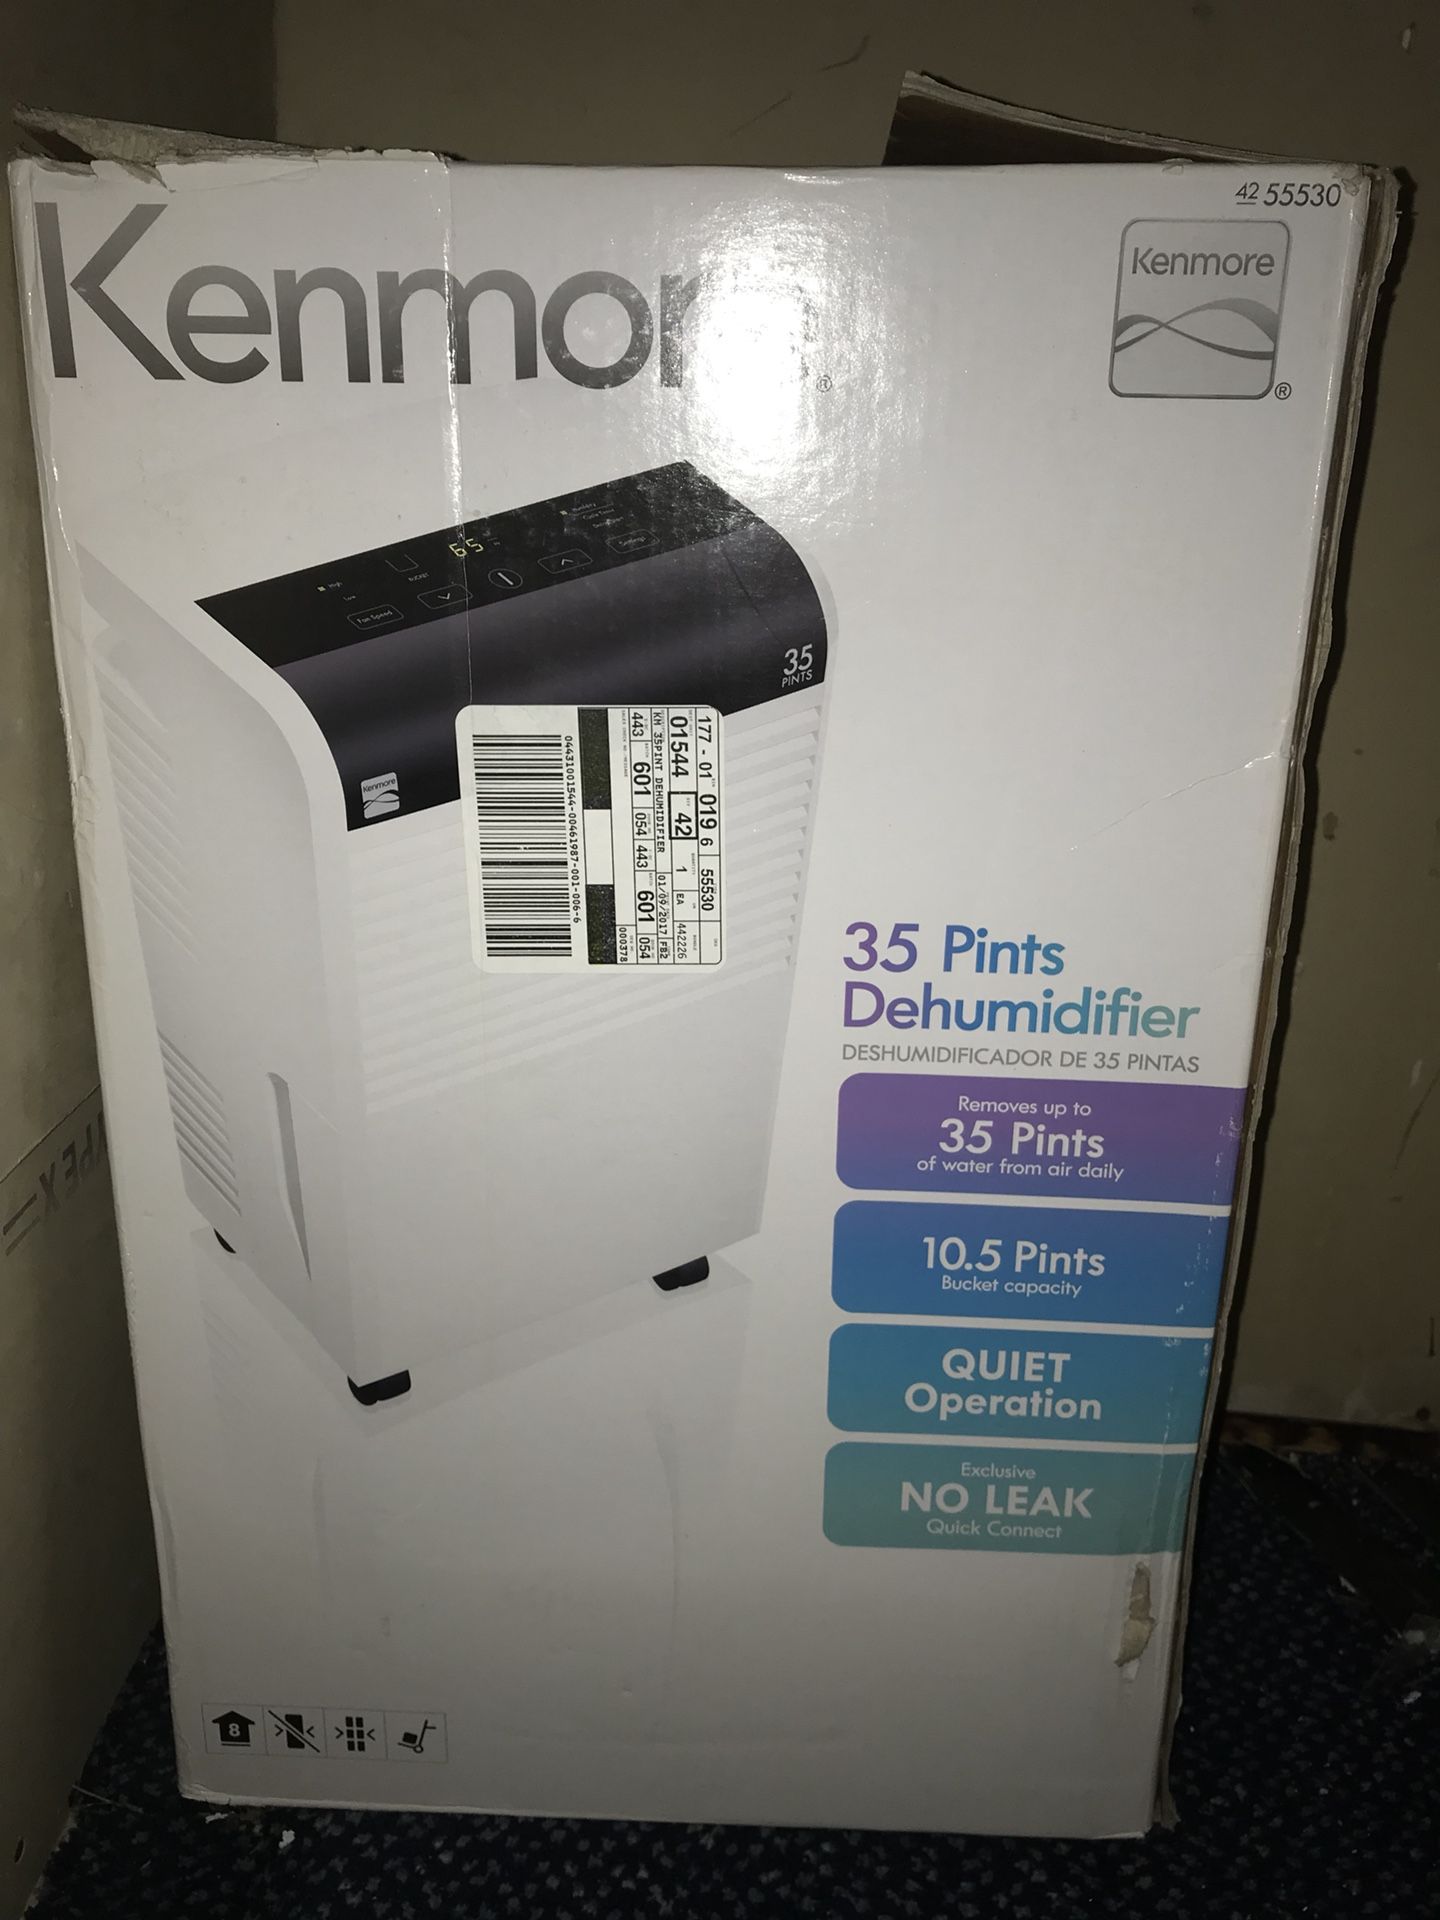 Kenmore dehumidifier